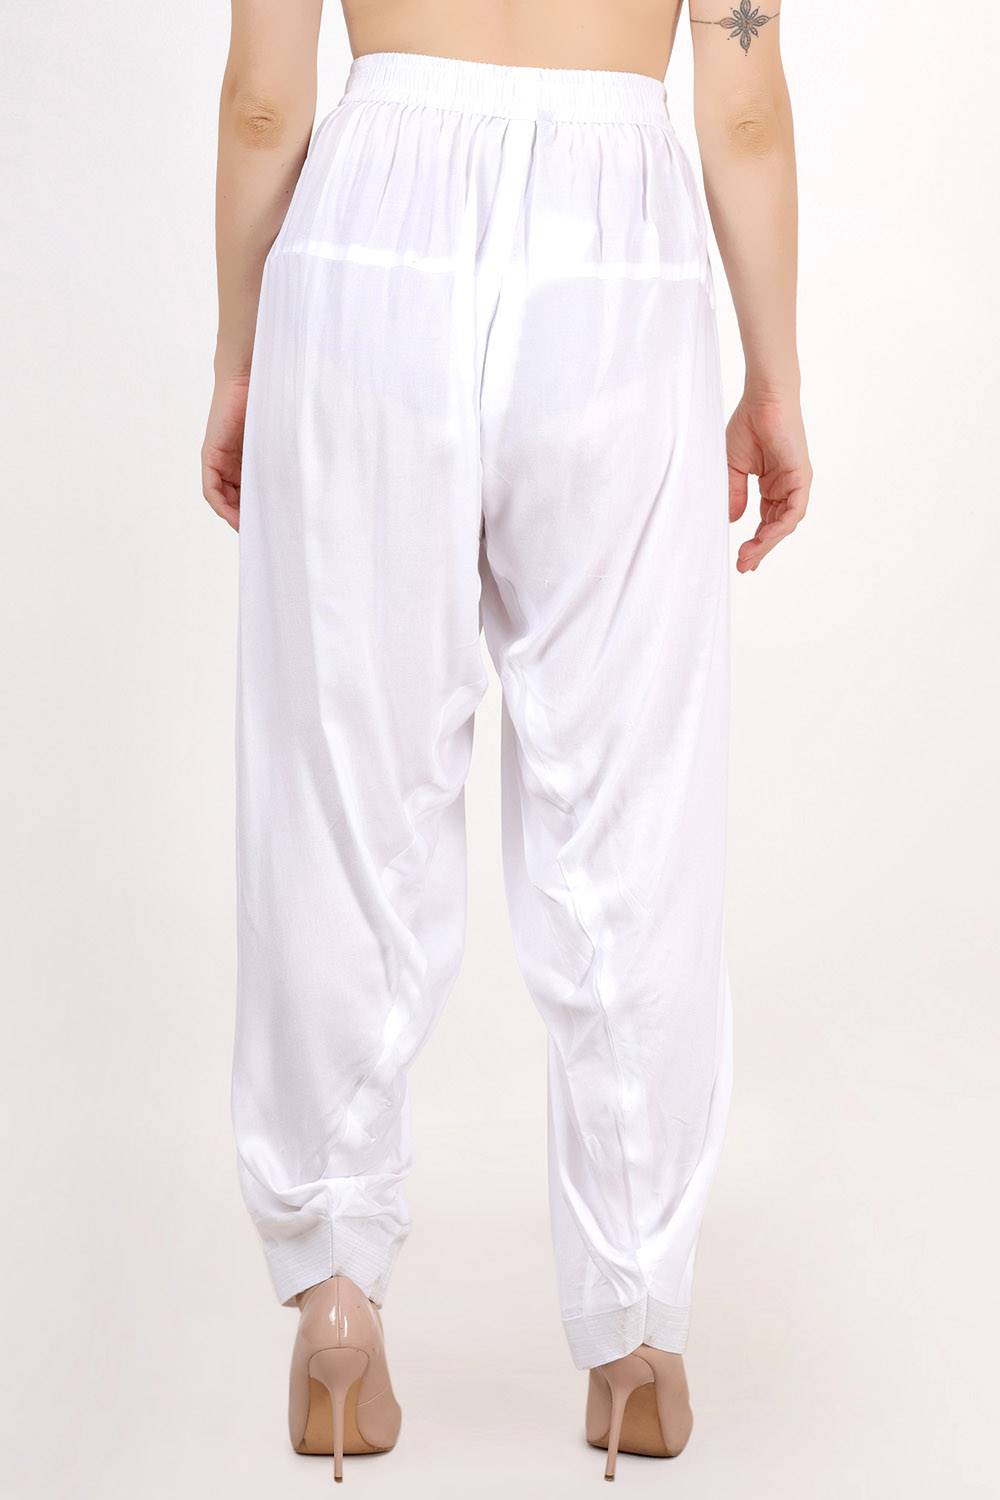 Lastinch Women's Plus Size White Patiala Salwar, White, 58 price in Saudi  Arabia